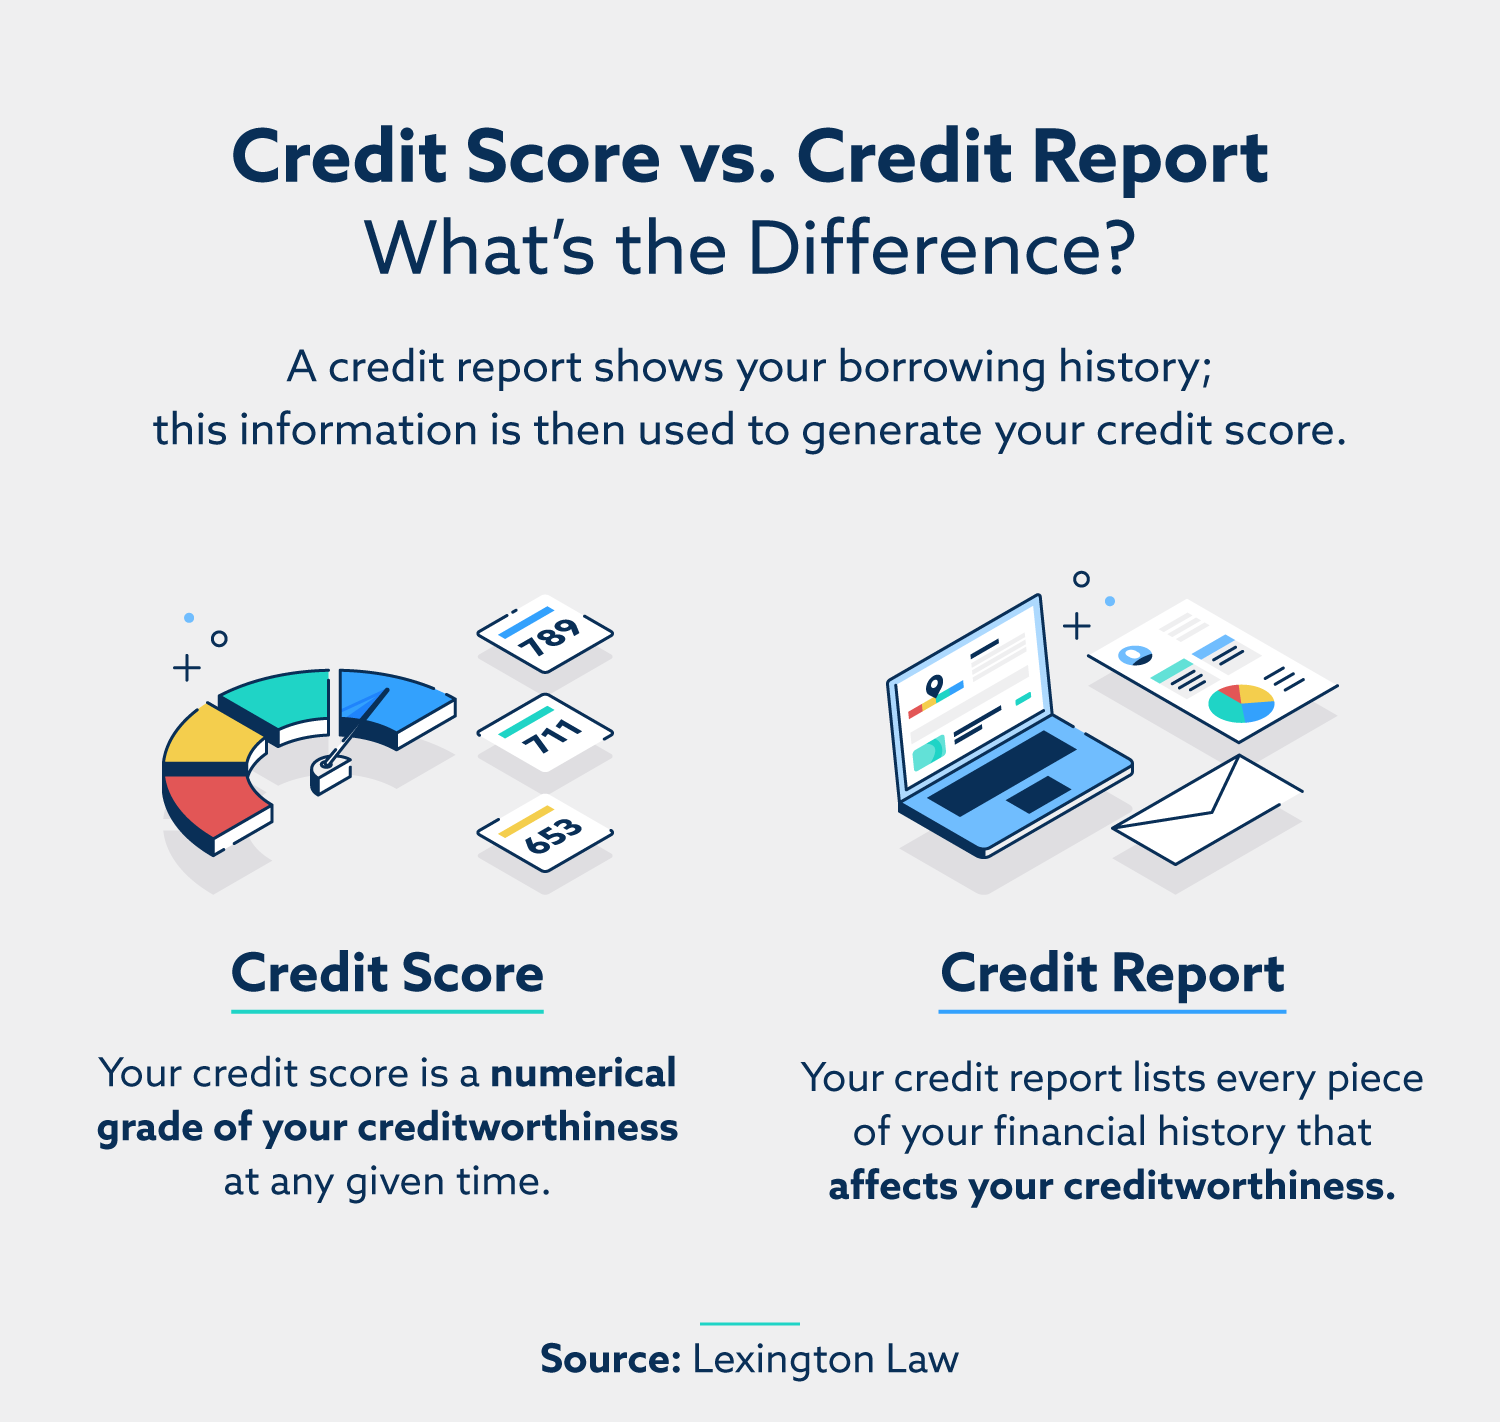 Physical Credit Reports vs Digital Credit Reports 2